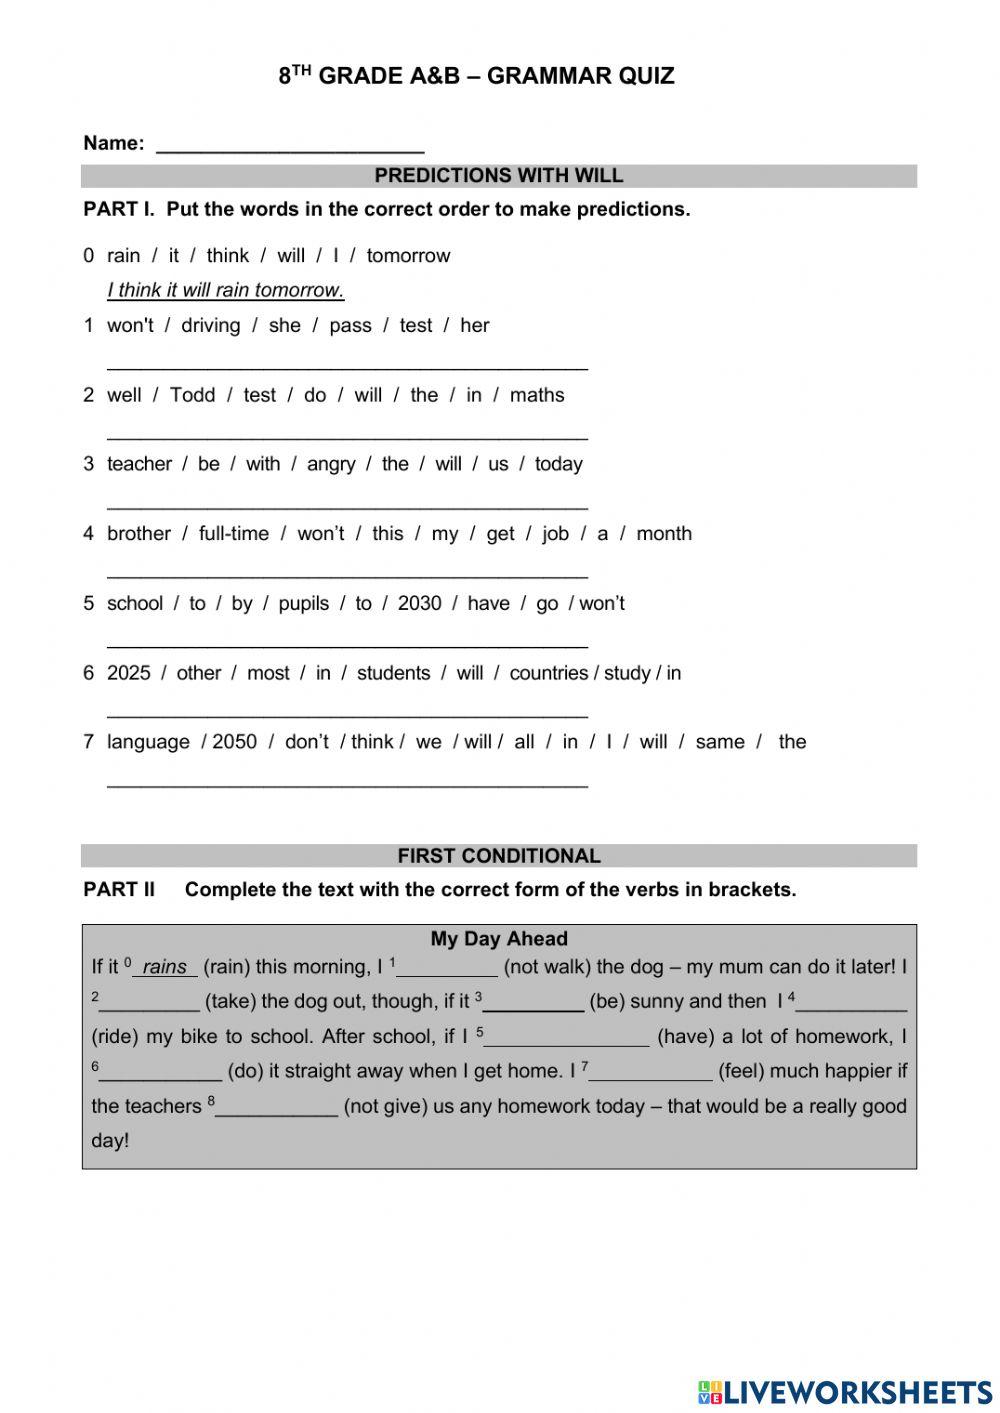 Grammar quiz - predictions-first conditional